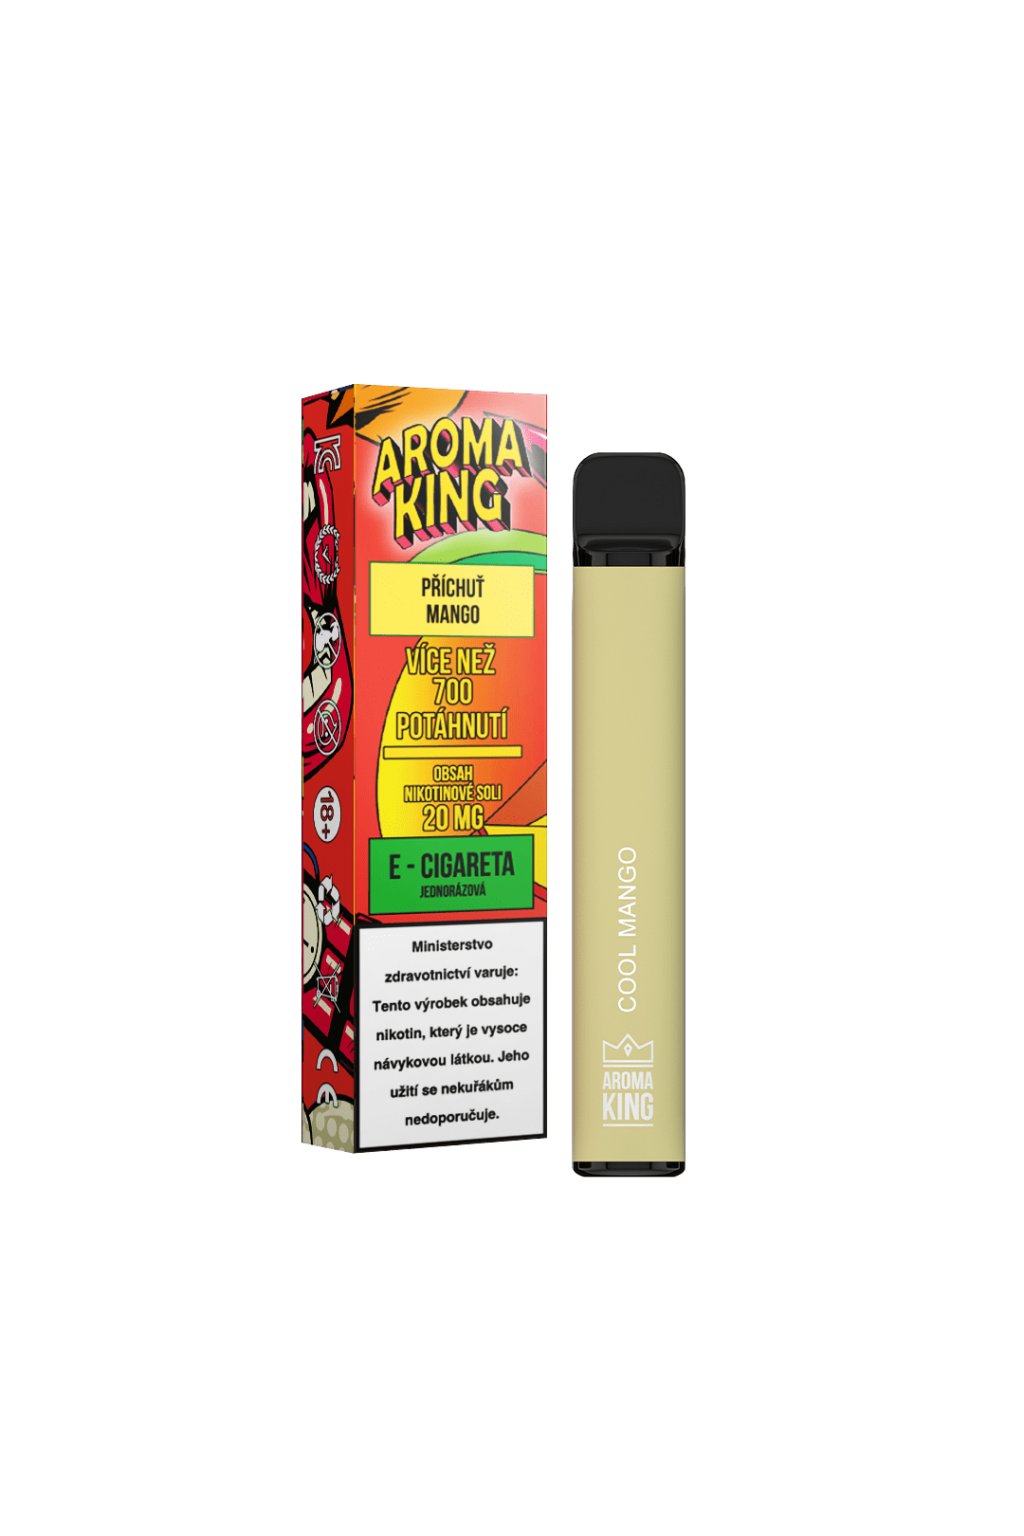 Aroma King jednorazova e cigareta cool mango cosmic 700 potahnuti min (1)